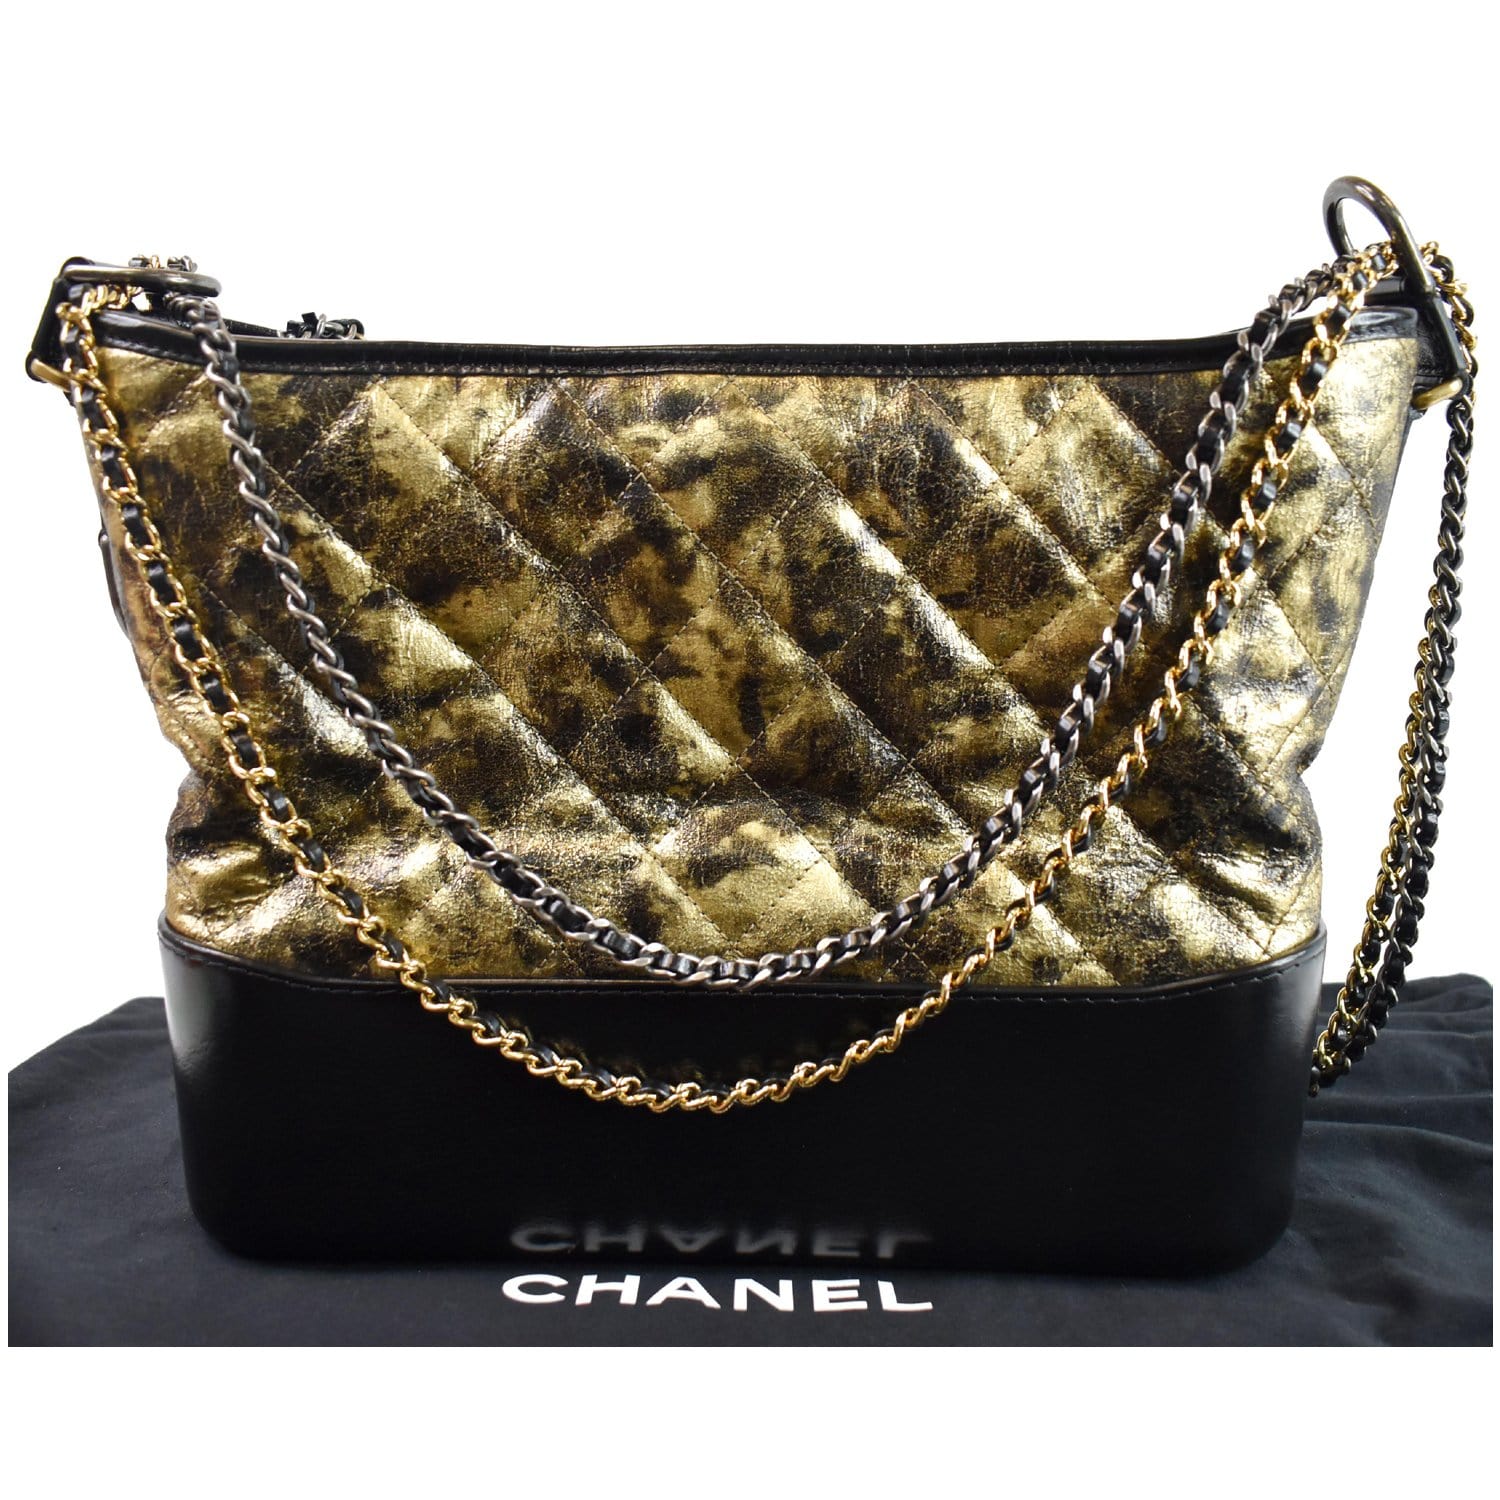 Handbags Chanel Chanel Shoulder Bag Gabrielle